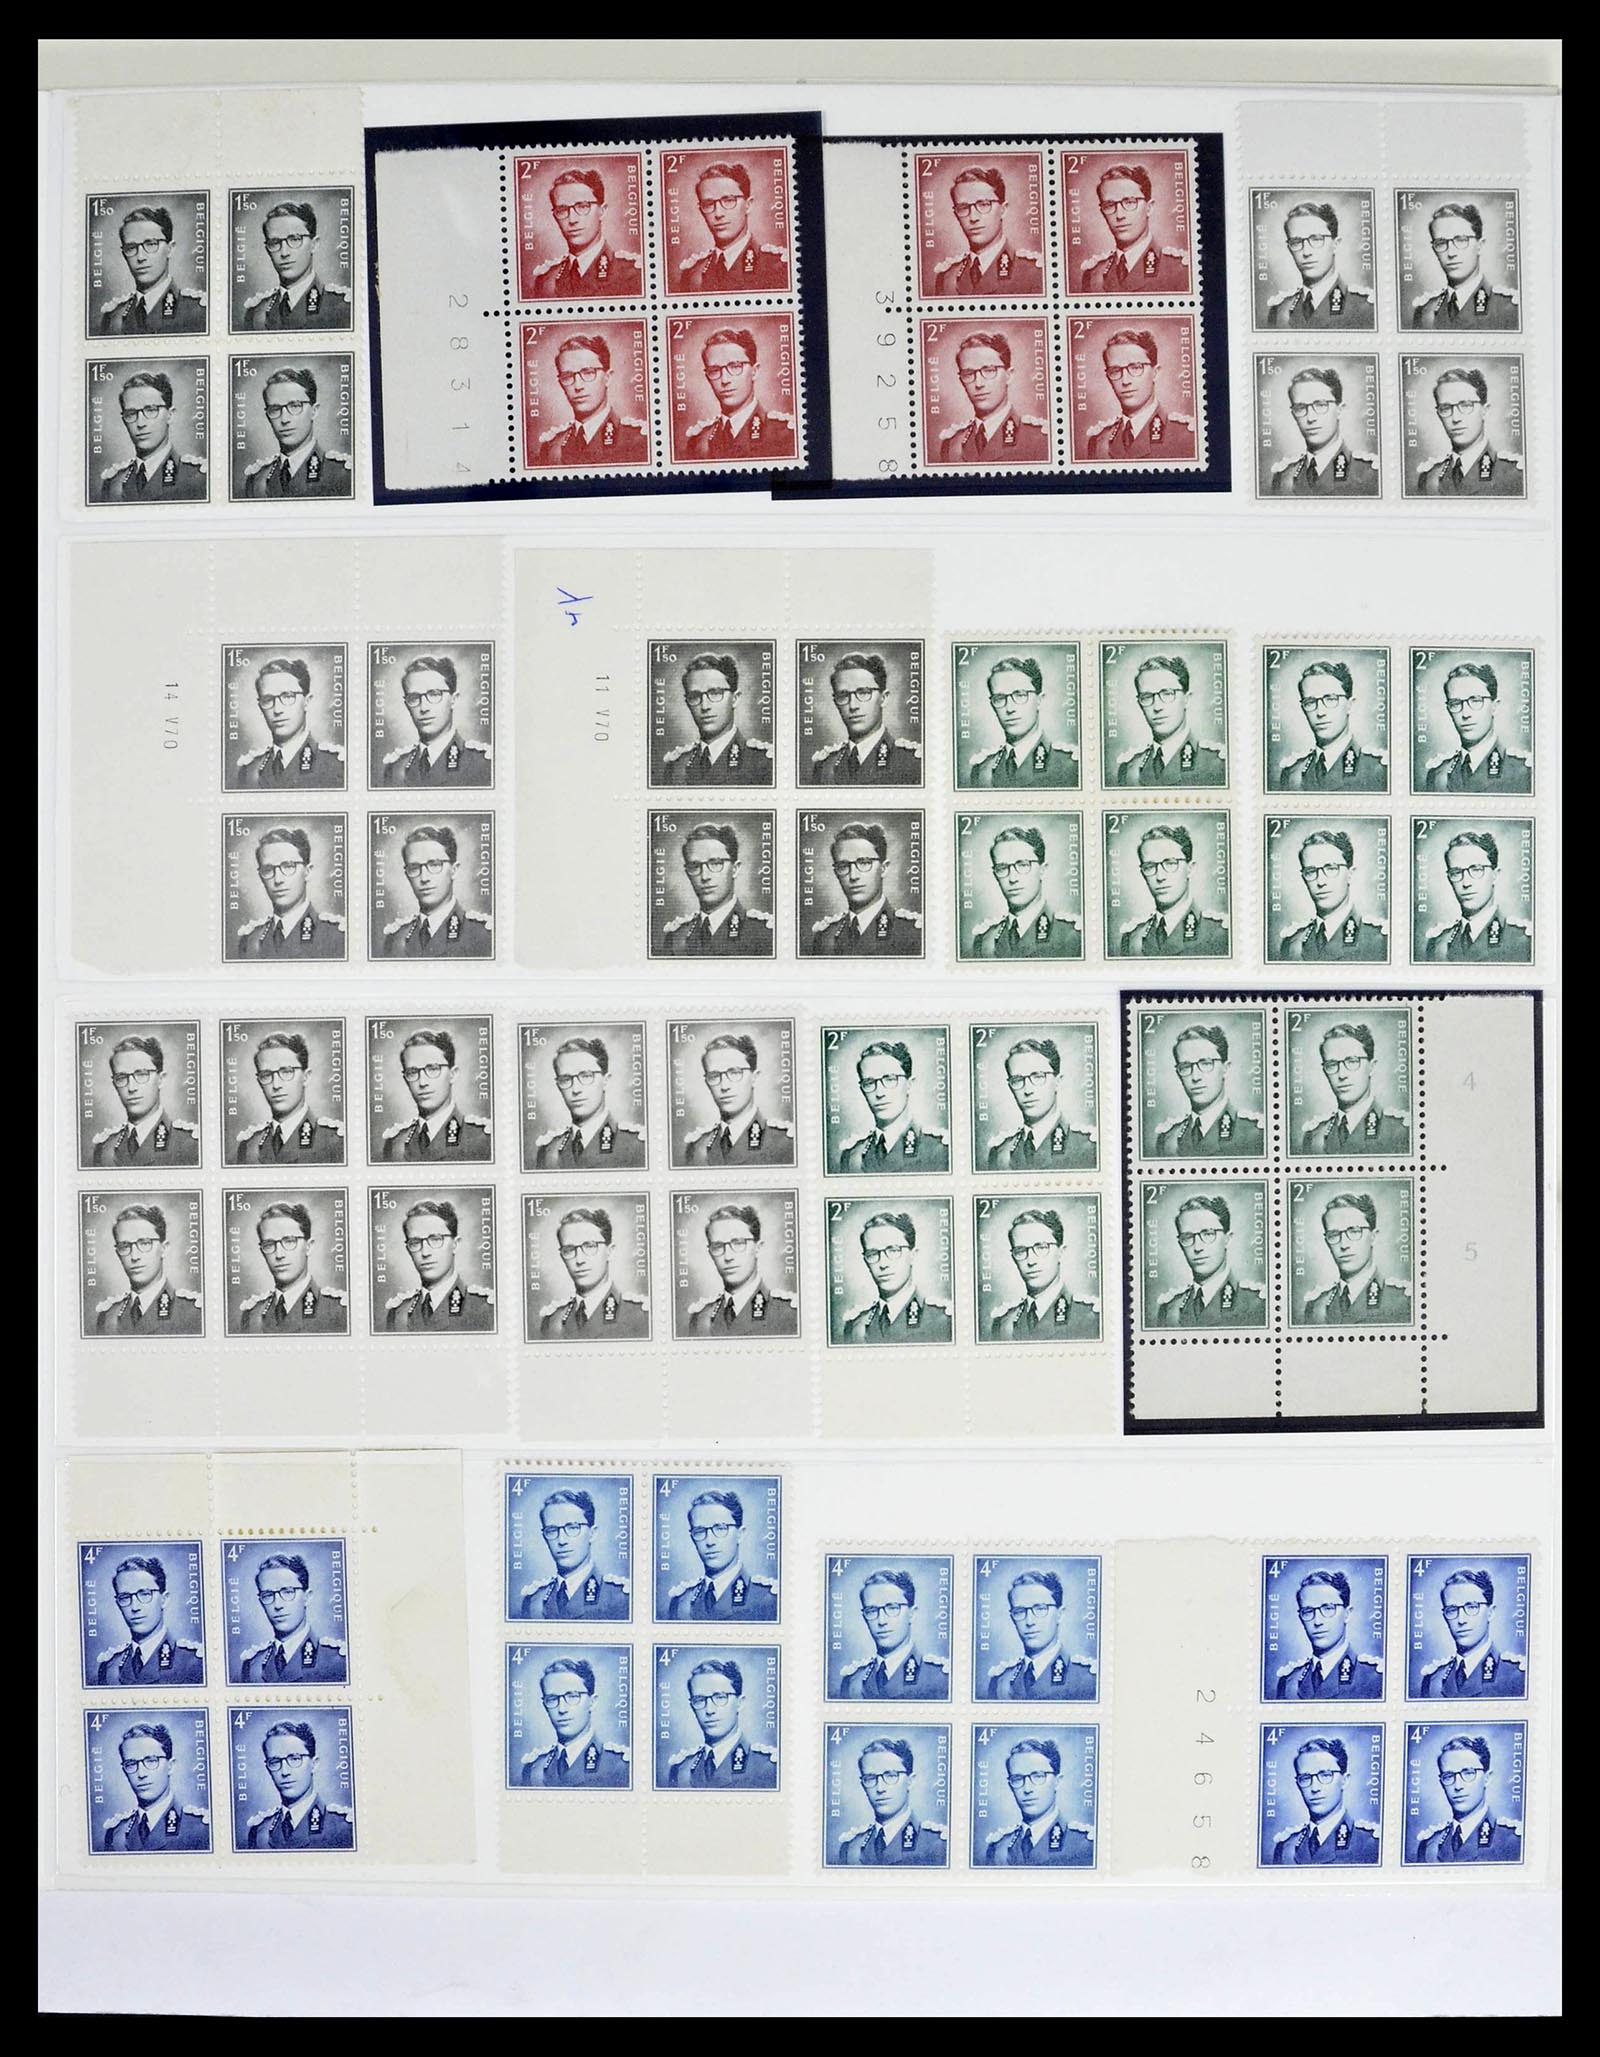 39229 0017 - Stamp collection 39229 Belgium Boudewijn with glasses 1952-1975.